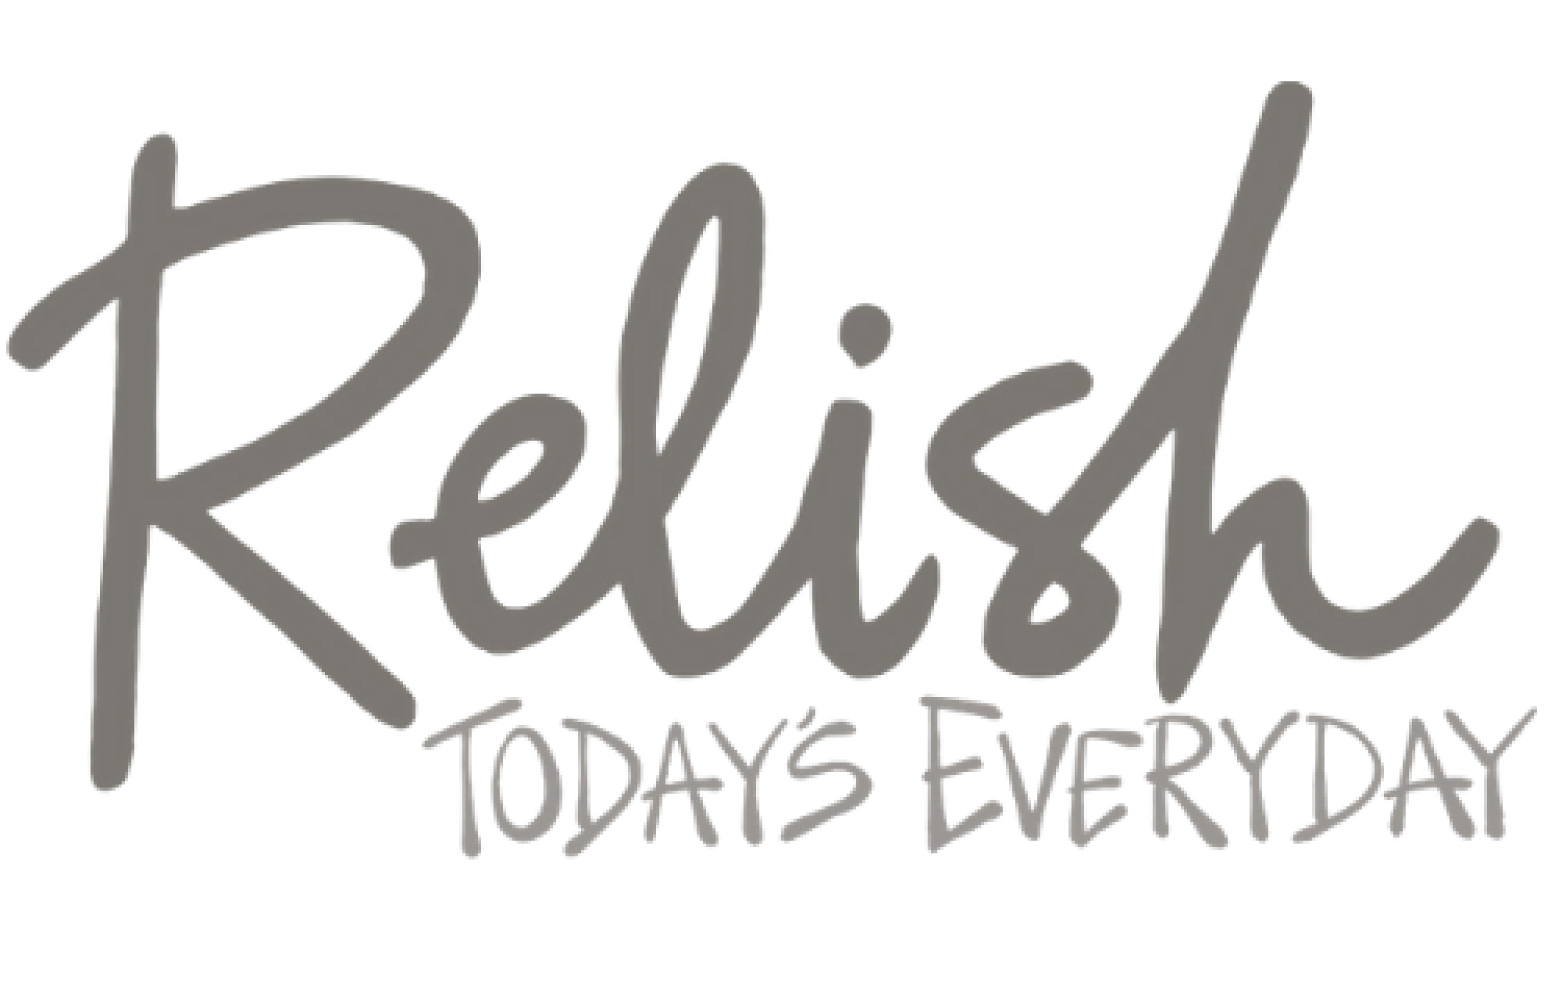 Relish Today's Everyday